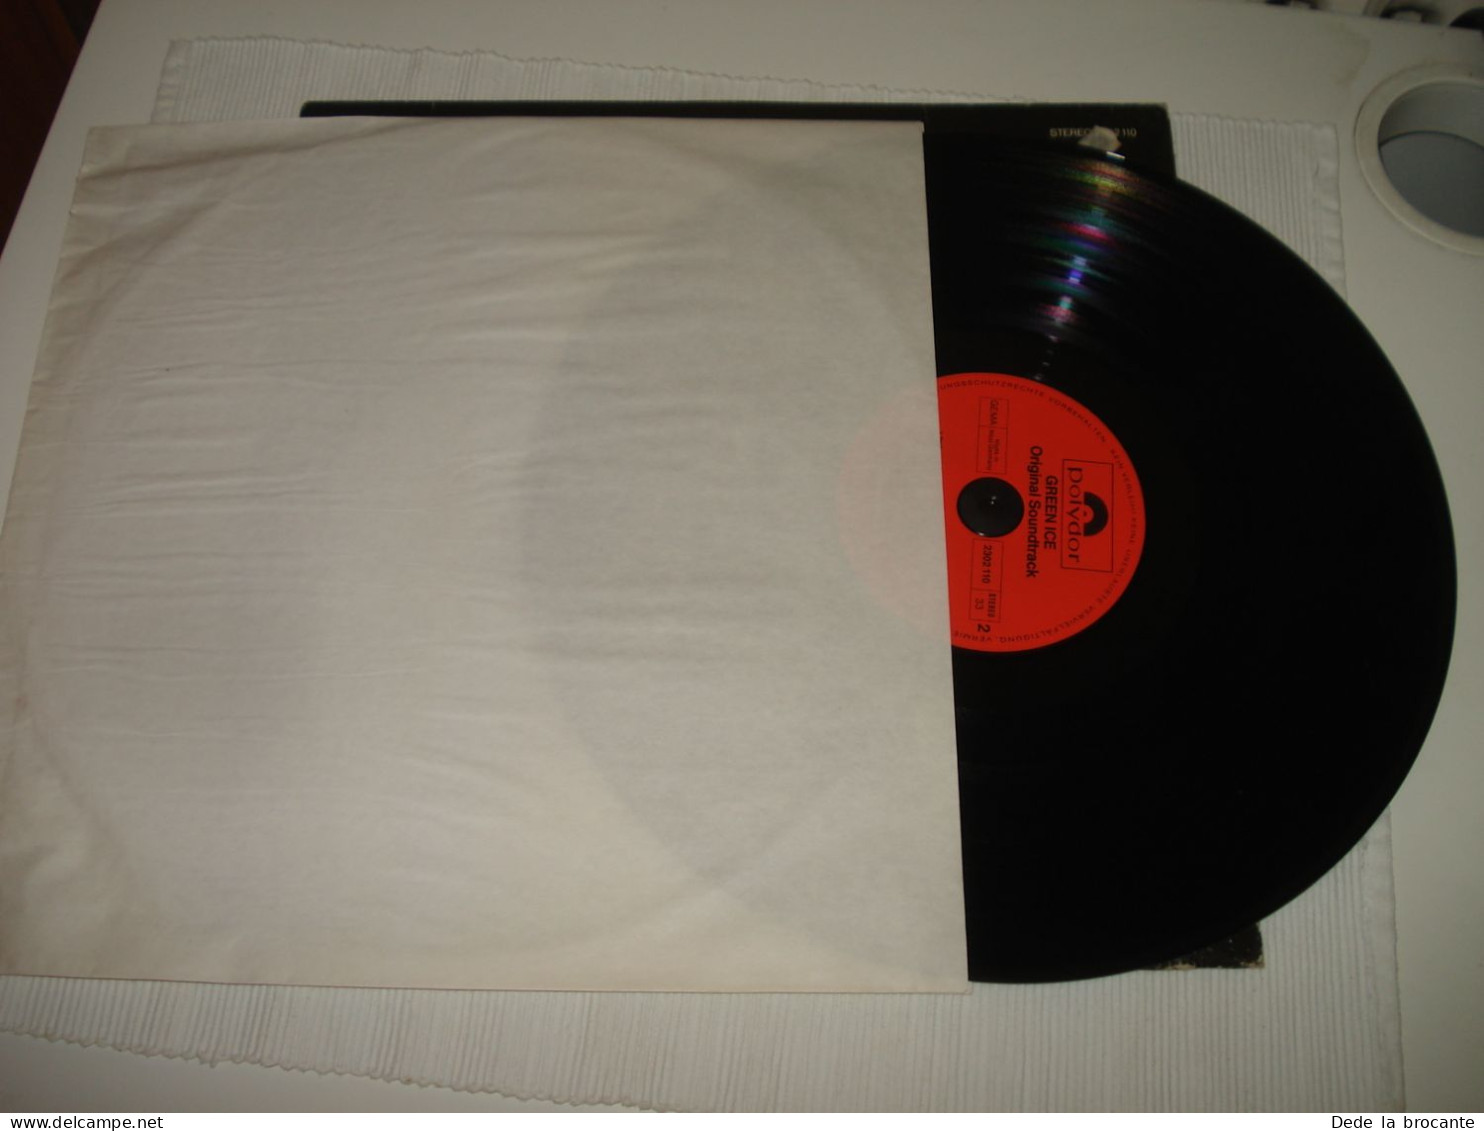 B10 / Bill Wyman  Green Ice - Soundtrack - LP -  2302 110 - Germany 1981 - M/VG+ - Soundtracks, Film Music